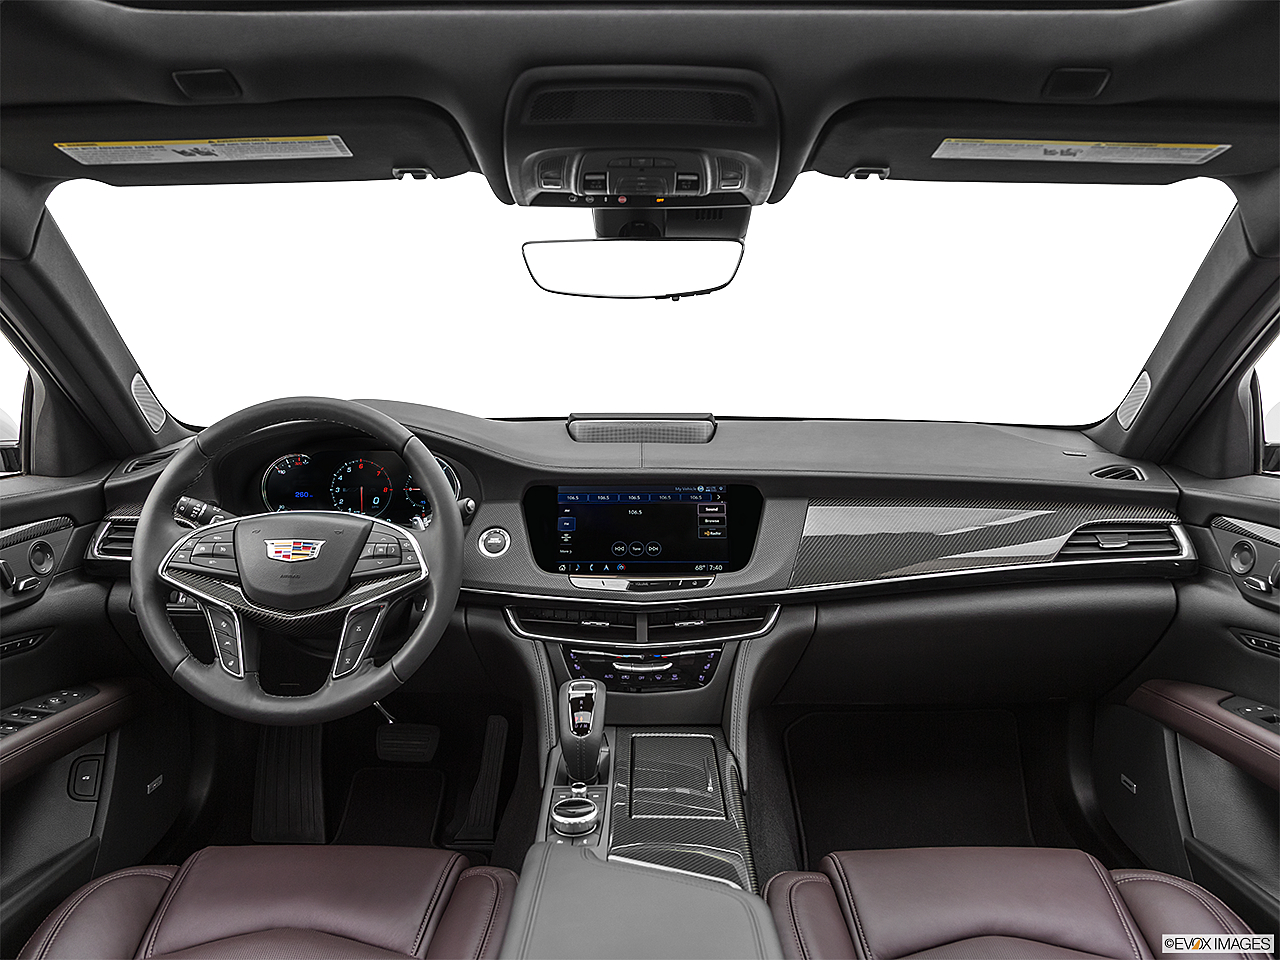 2020 Cadillac CT6-V AWD 4.2TT 4dr Sedan - Research - GrooveCar